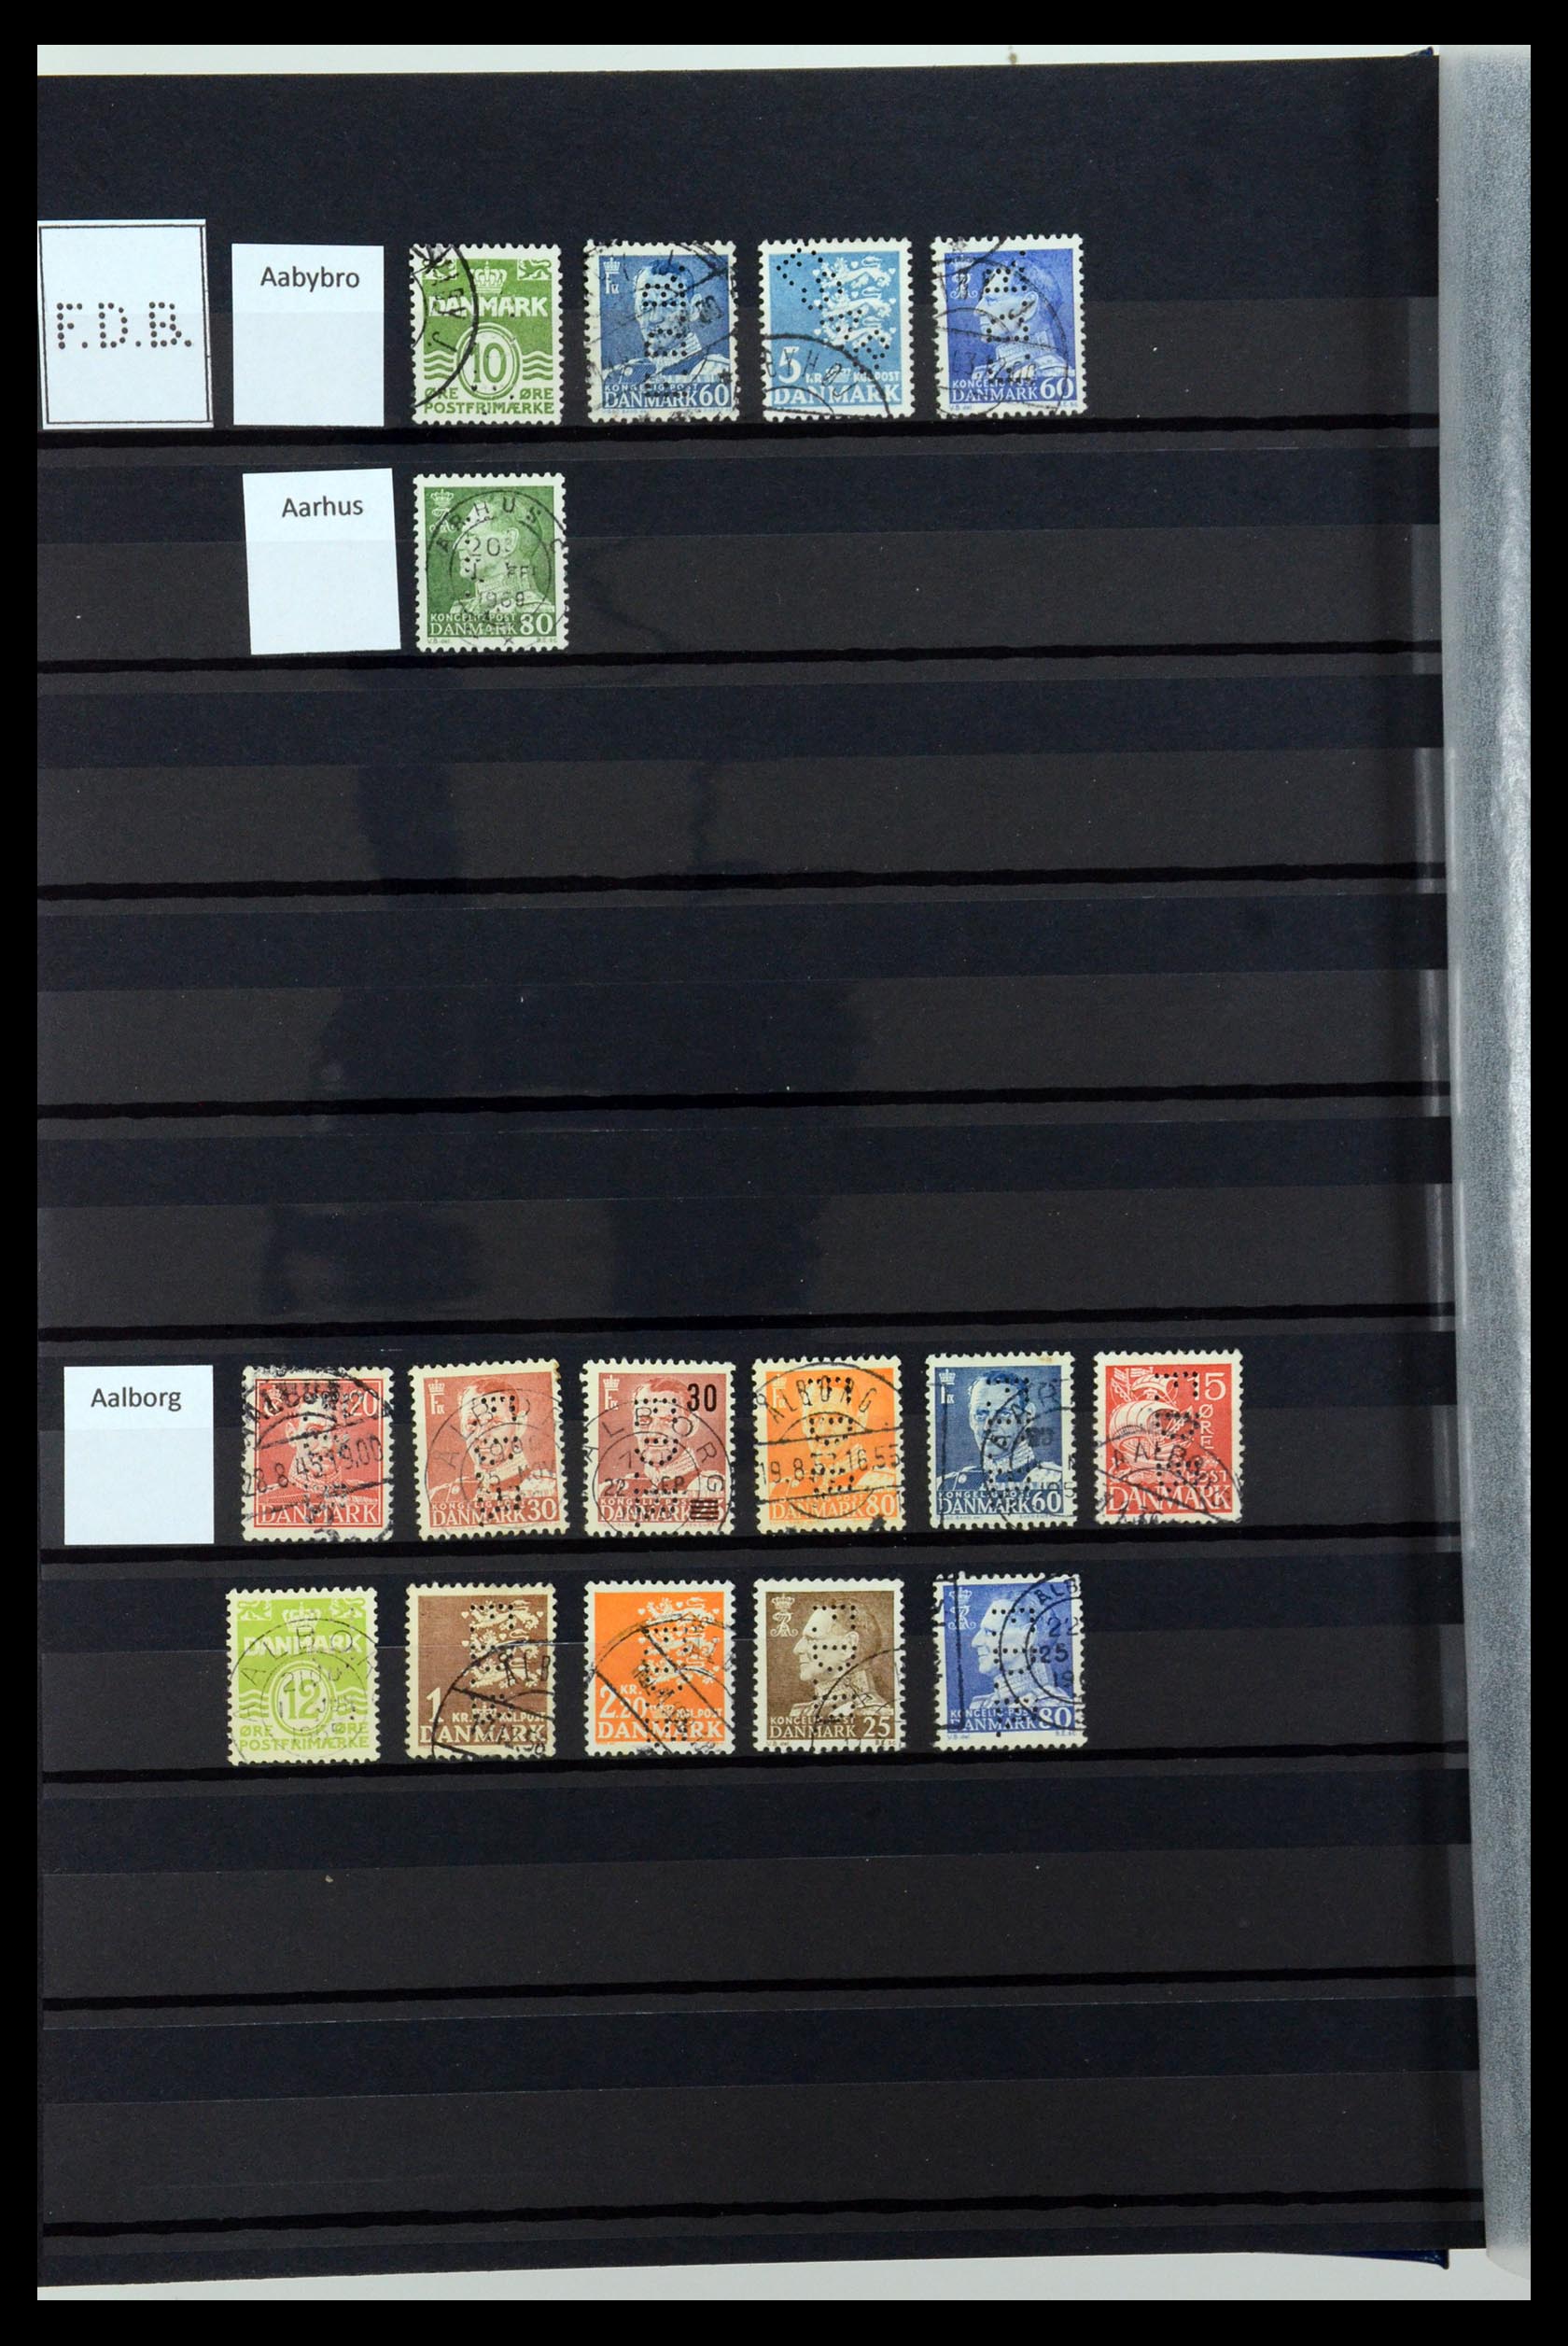 36396 066 - Stamp collection 36396 Denmark perfins.